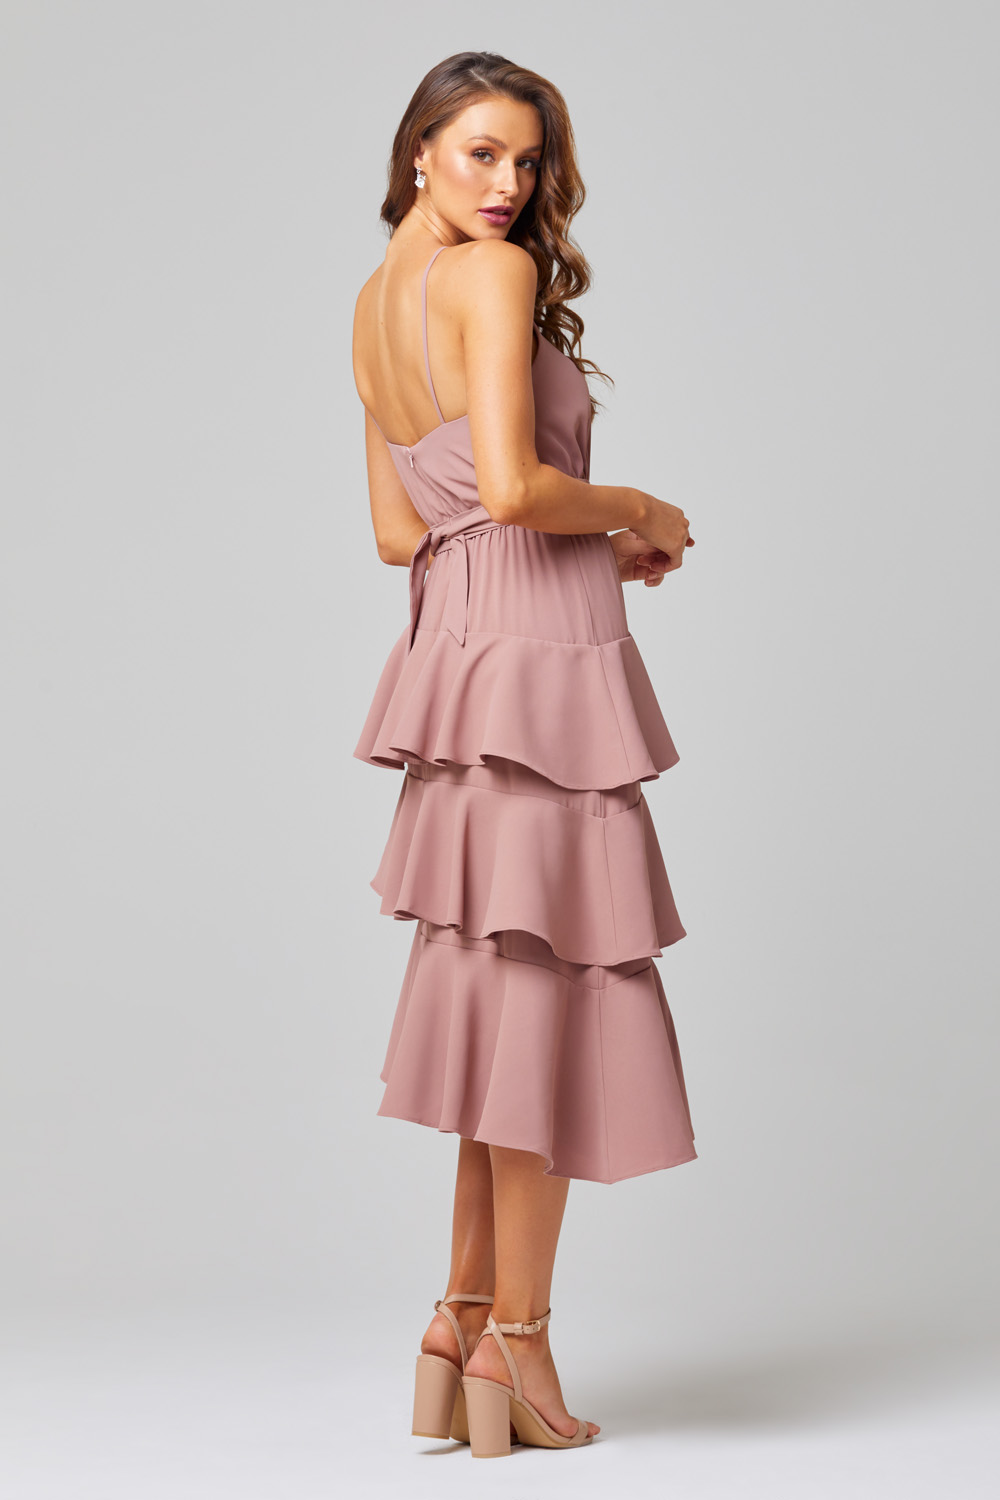 ARIEL TO851 Papillon 2020 Bridesmaid dress by Tania Olsen Designs